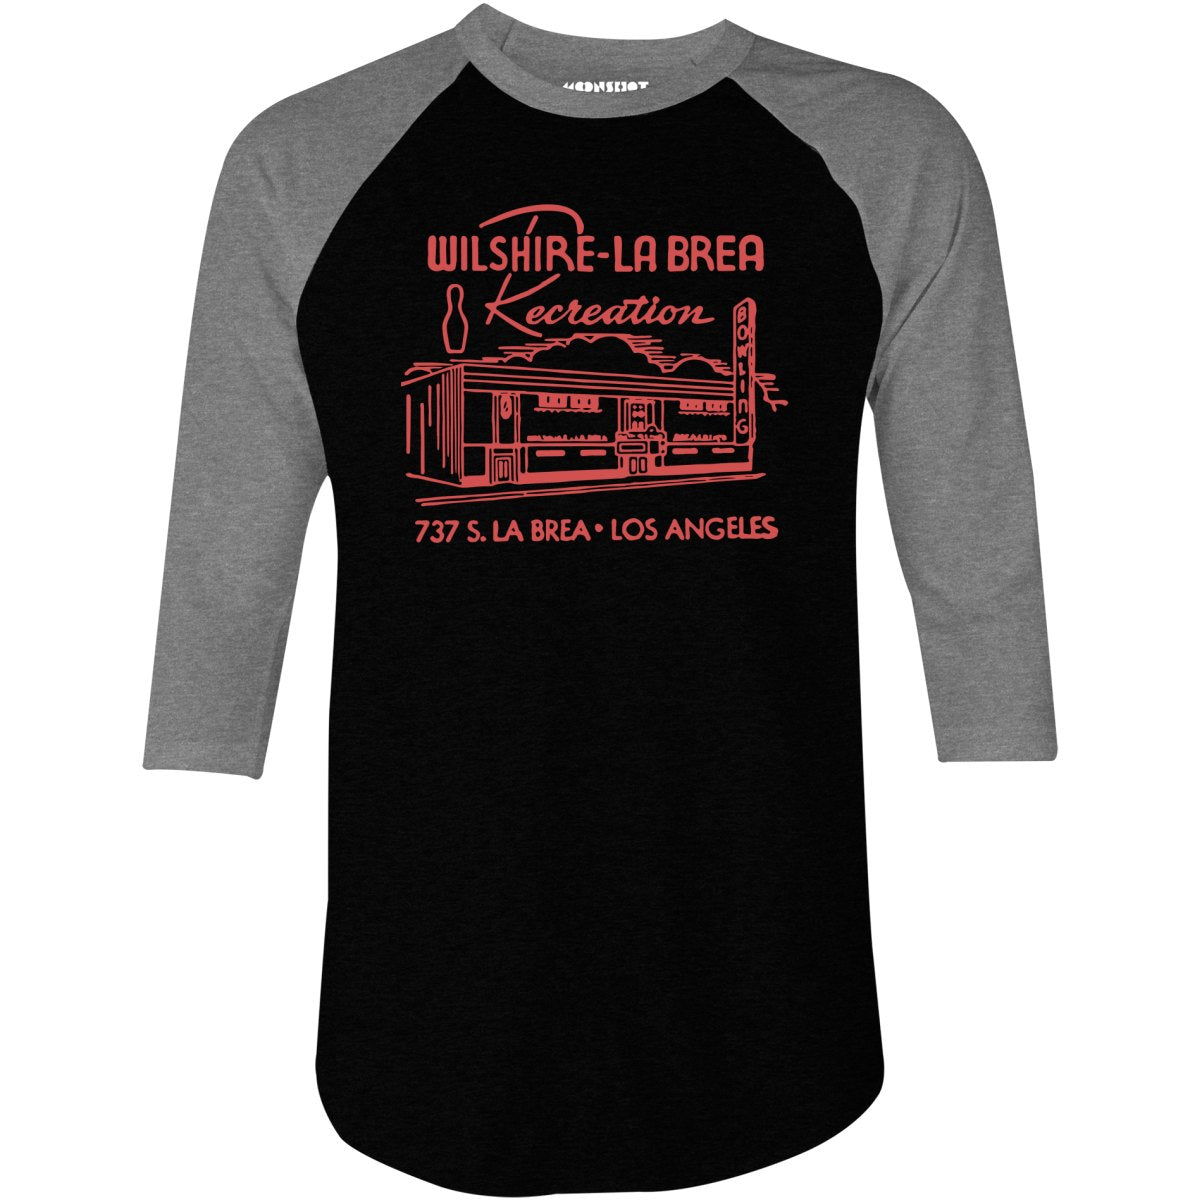 Wilshire-La Brea Recreation Center - Los Angeles, CA - Vintage Bowling Alley - 3/4 Sleeve Raglan T-Shirt